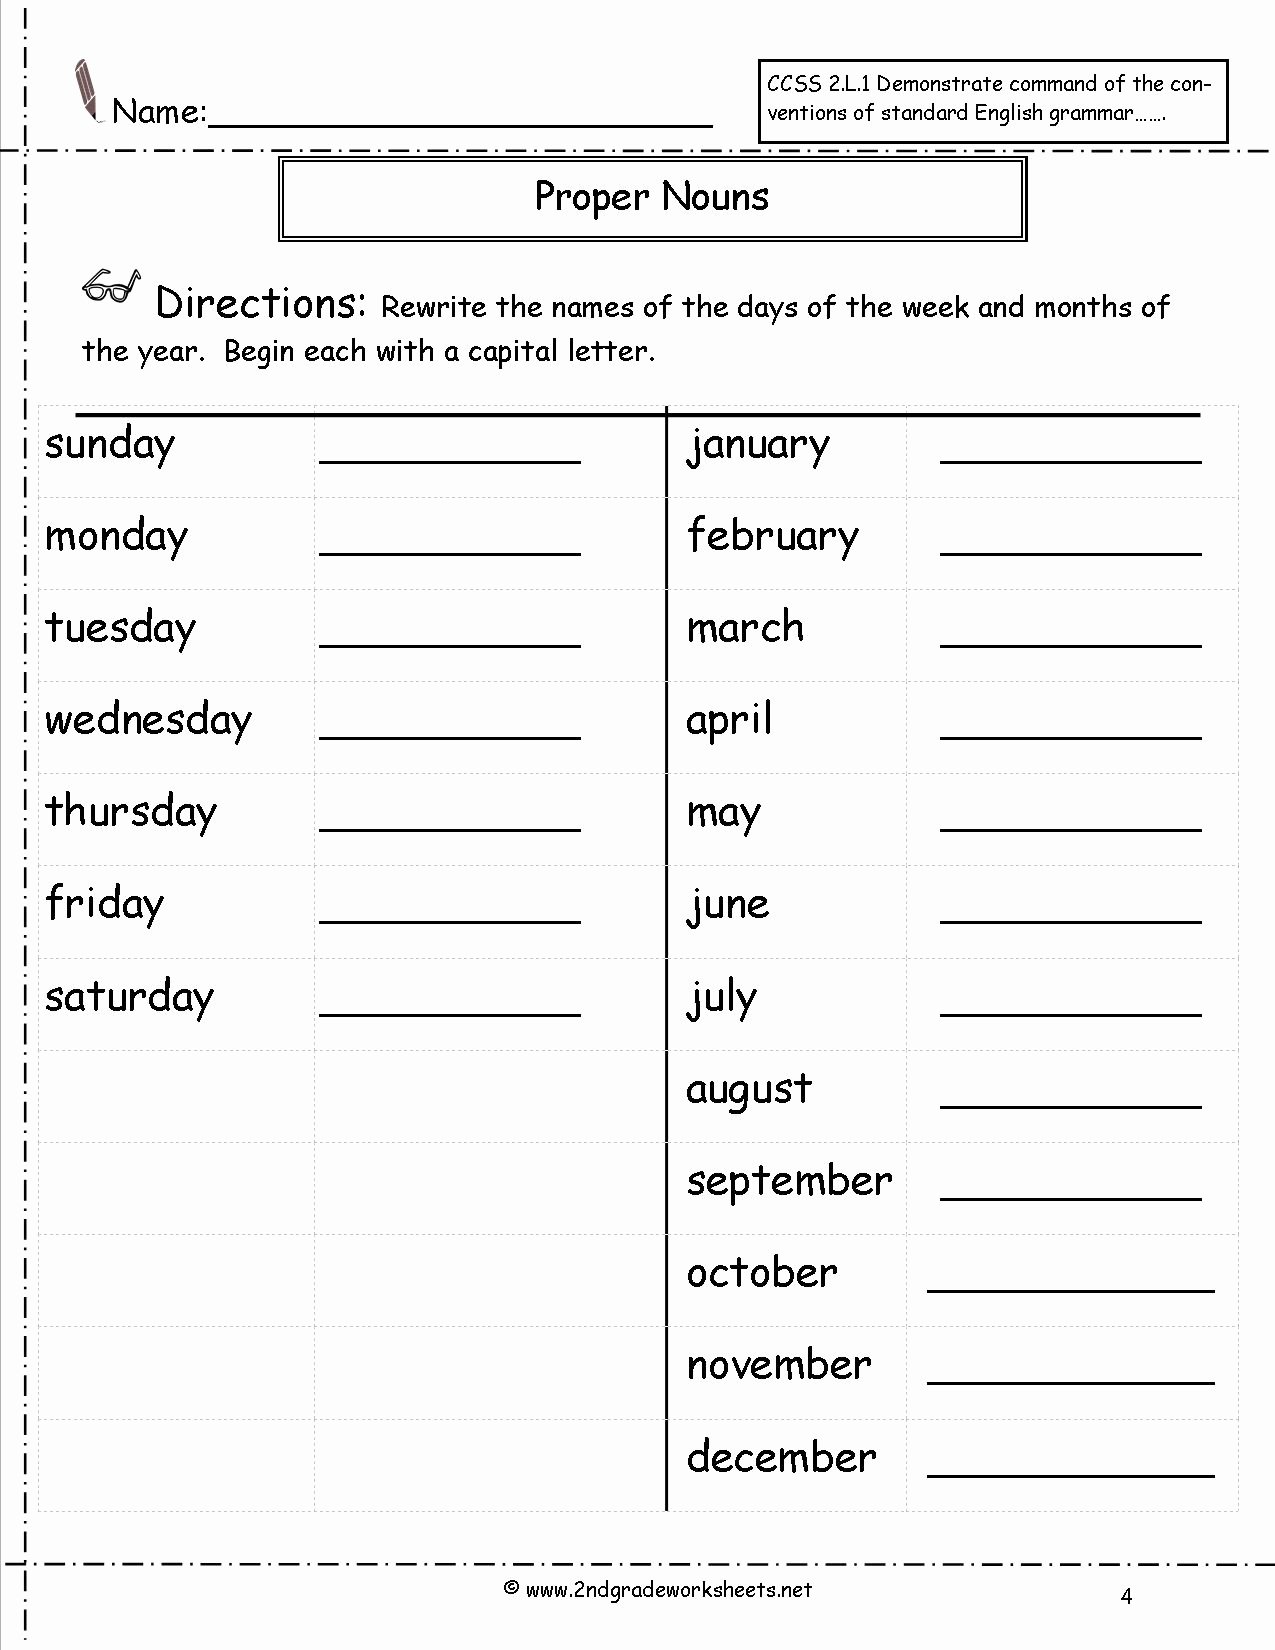 Proper Nouns Worksheet 2nd Grade Unique Mon and Proper Nouns Worksheet